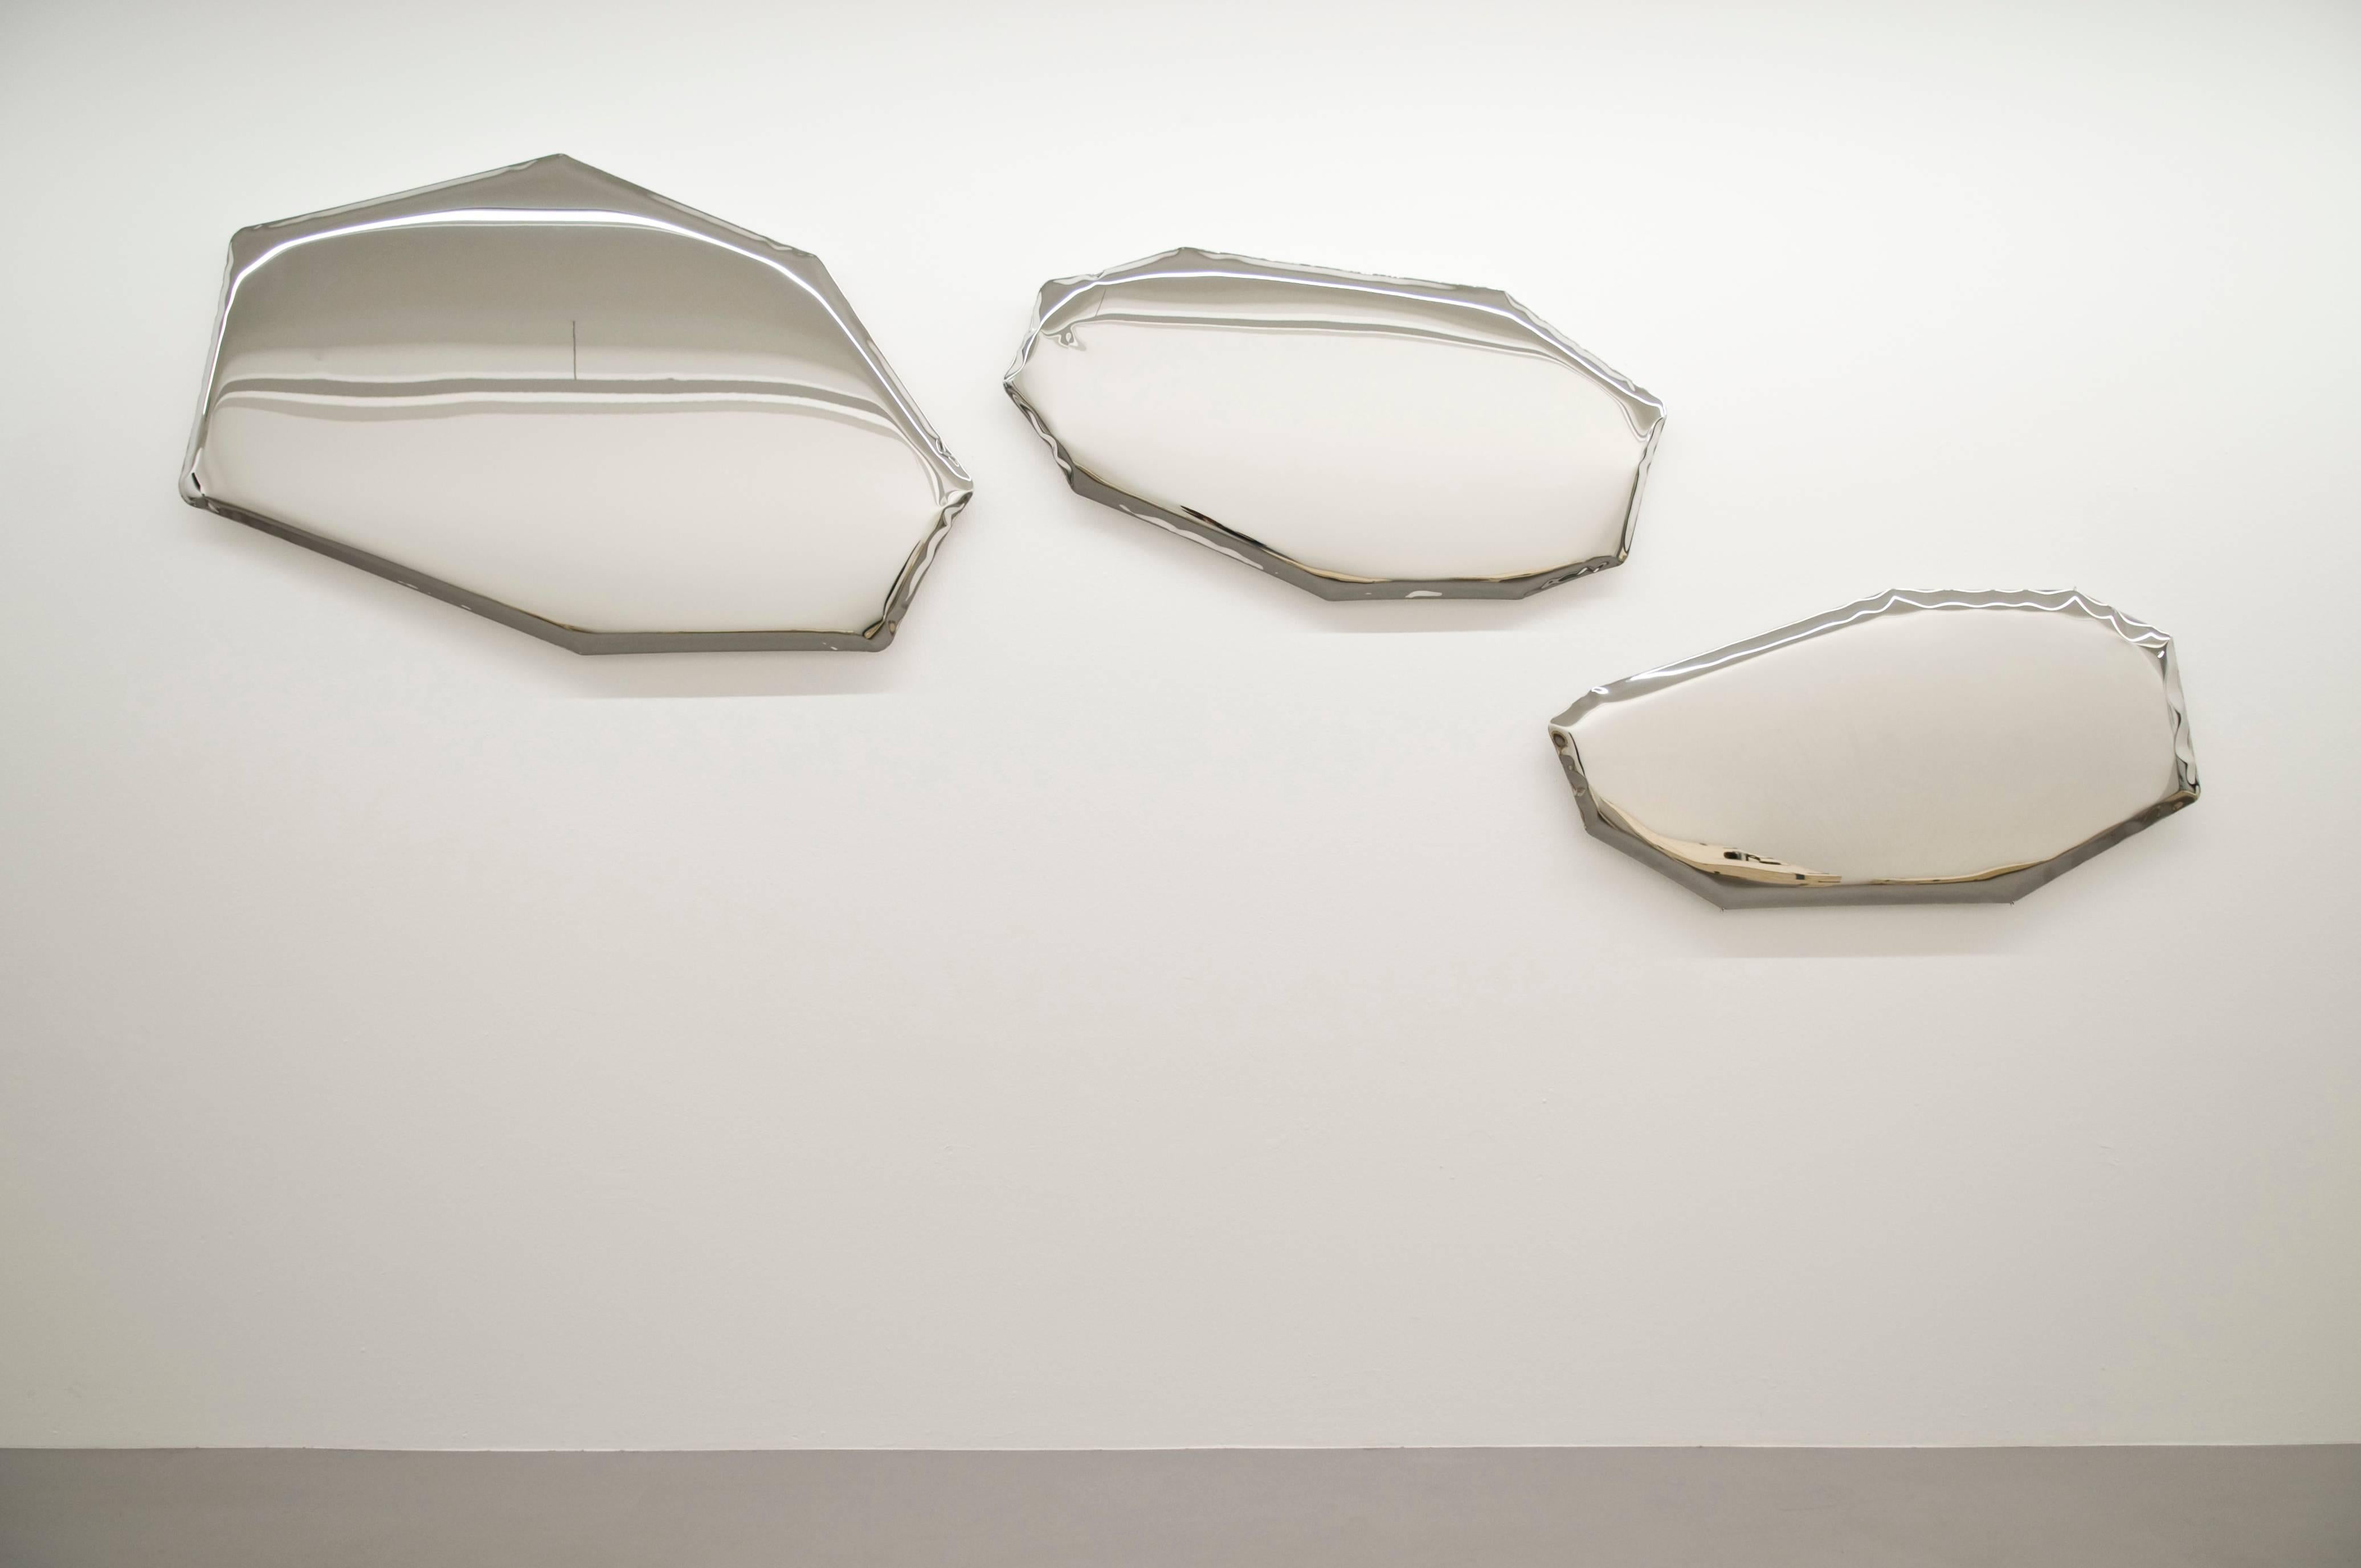 Minimalist Contemporary Mirror 'Tafla O5' in Stainless Steel by Zieta Prozessdesign